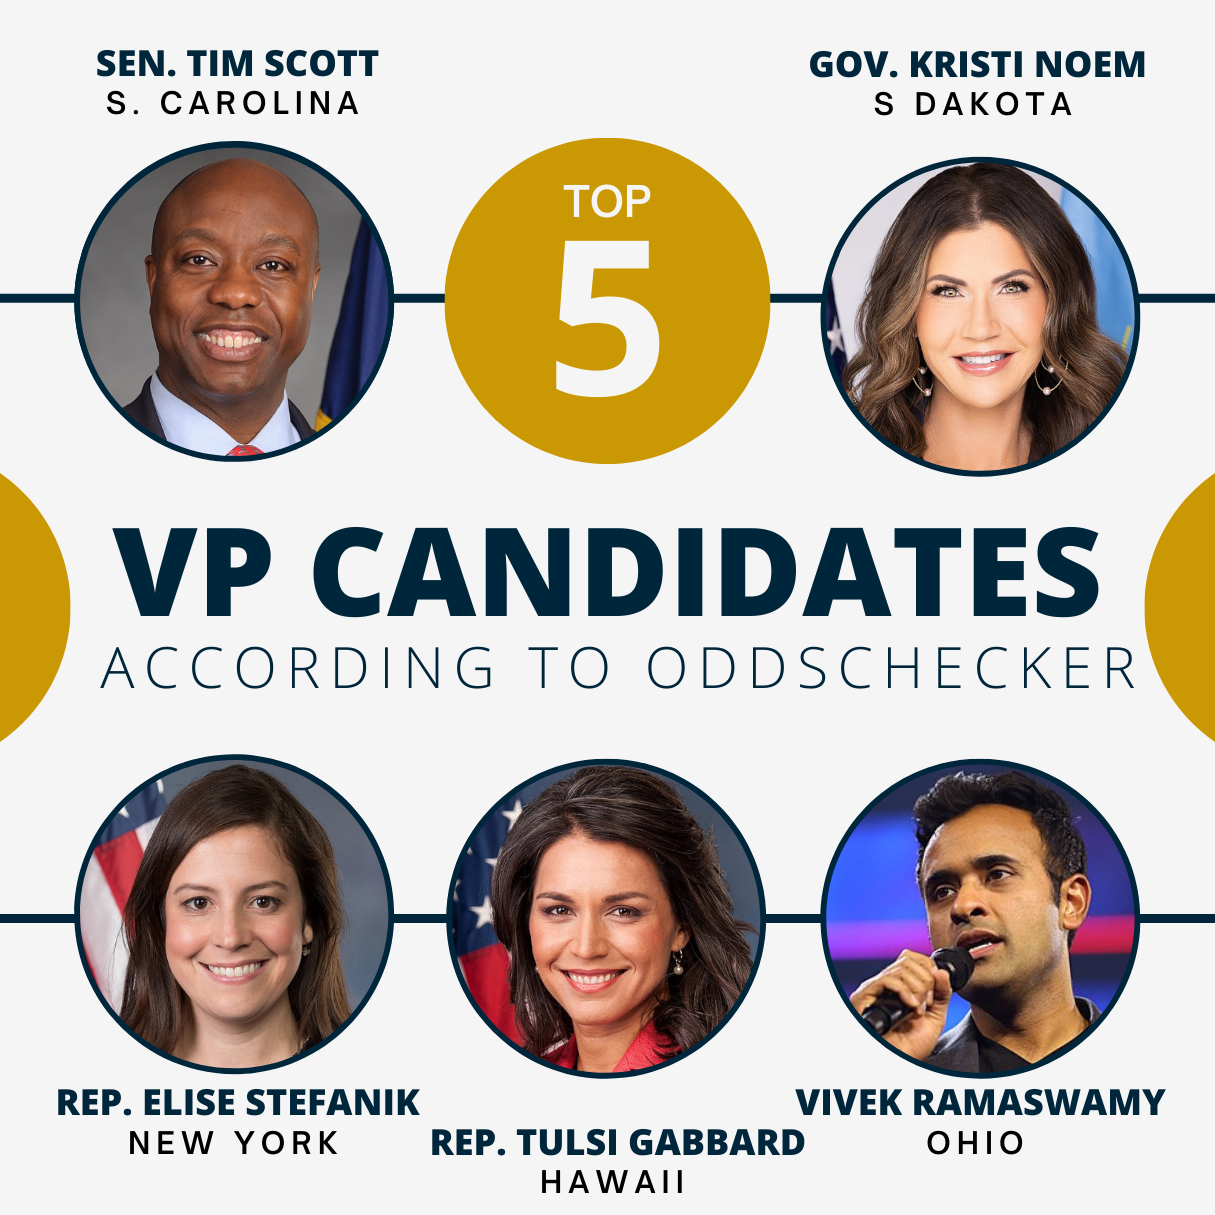 Top five candidates for Donald Trump's VP: Tim Scott, Kristi Noem, Elise Stefanik, Tulsi Gabbard, Vivek Ramaswamy. 